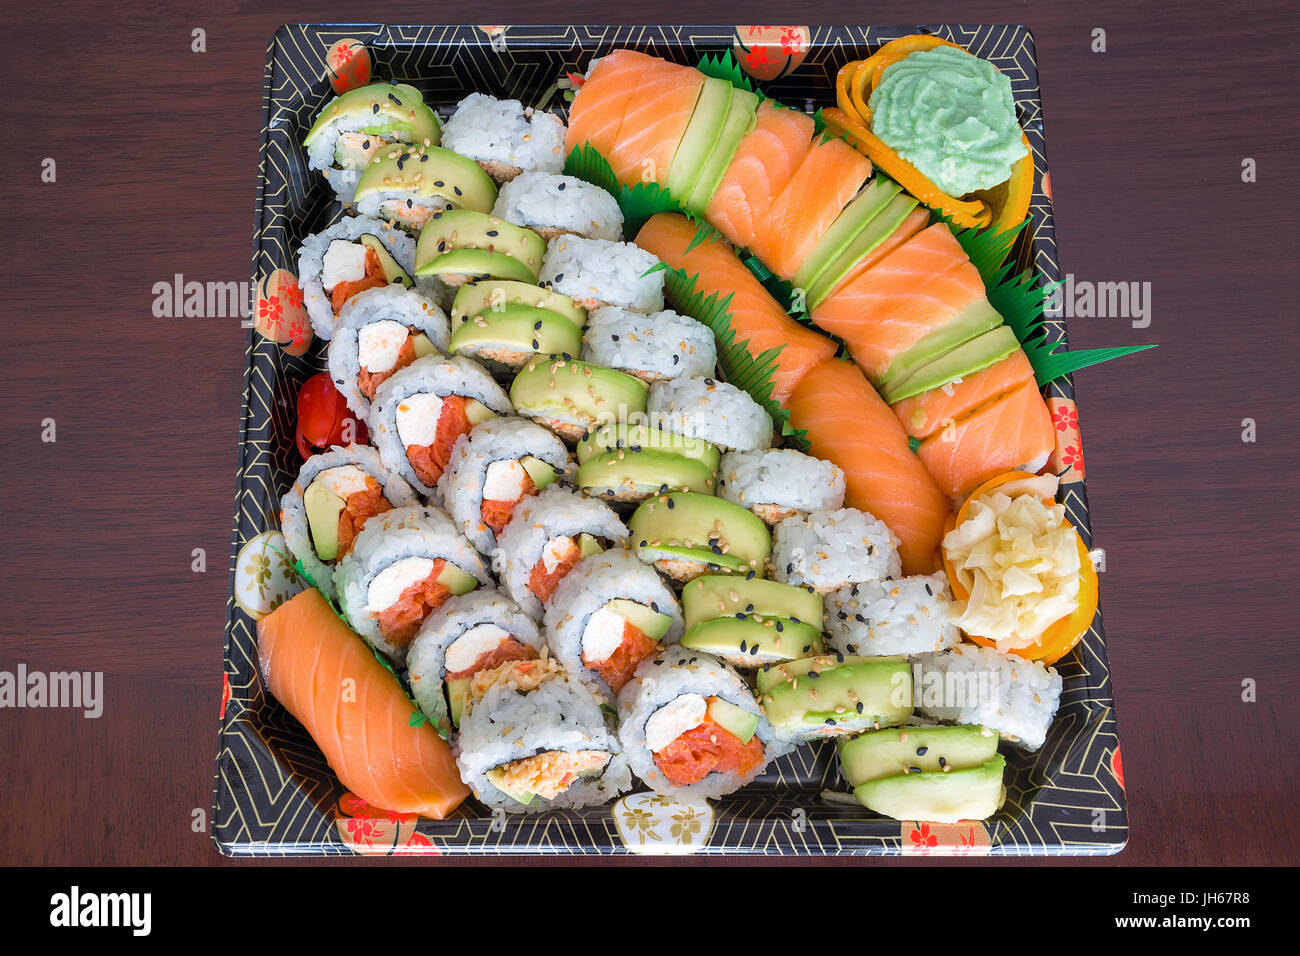 https://c8.alamy.com/comp/JH67R8/sushi-party-platter-with-fresh-raw-smoked-salmon-california-caterpillar-JH67R8.jpg